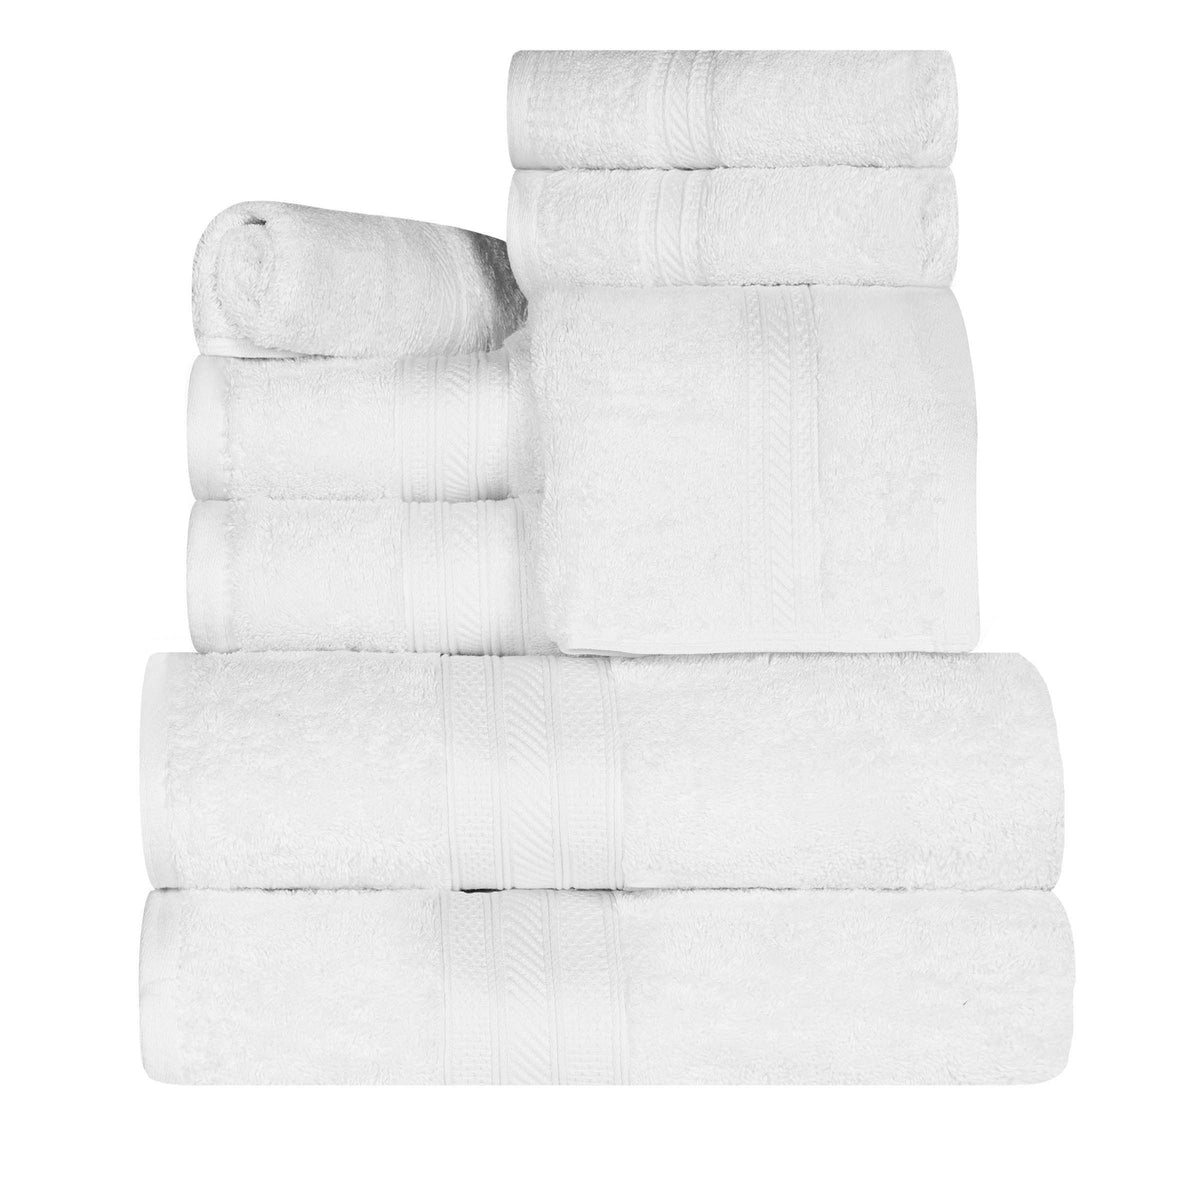 Cotton Heavyweight Absorbent Plush 8 Piece Towel Set - White